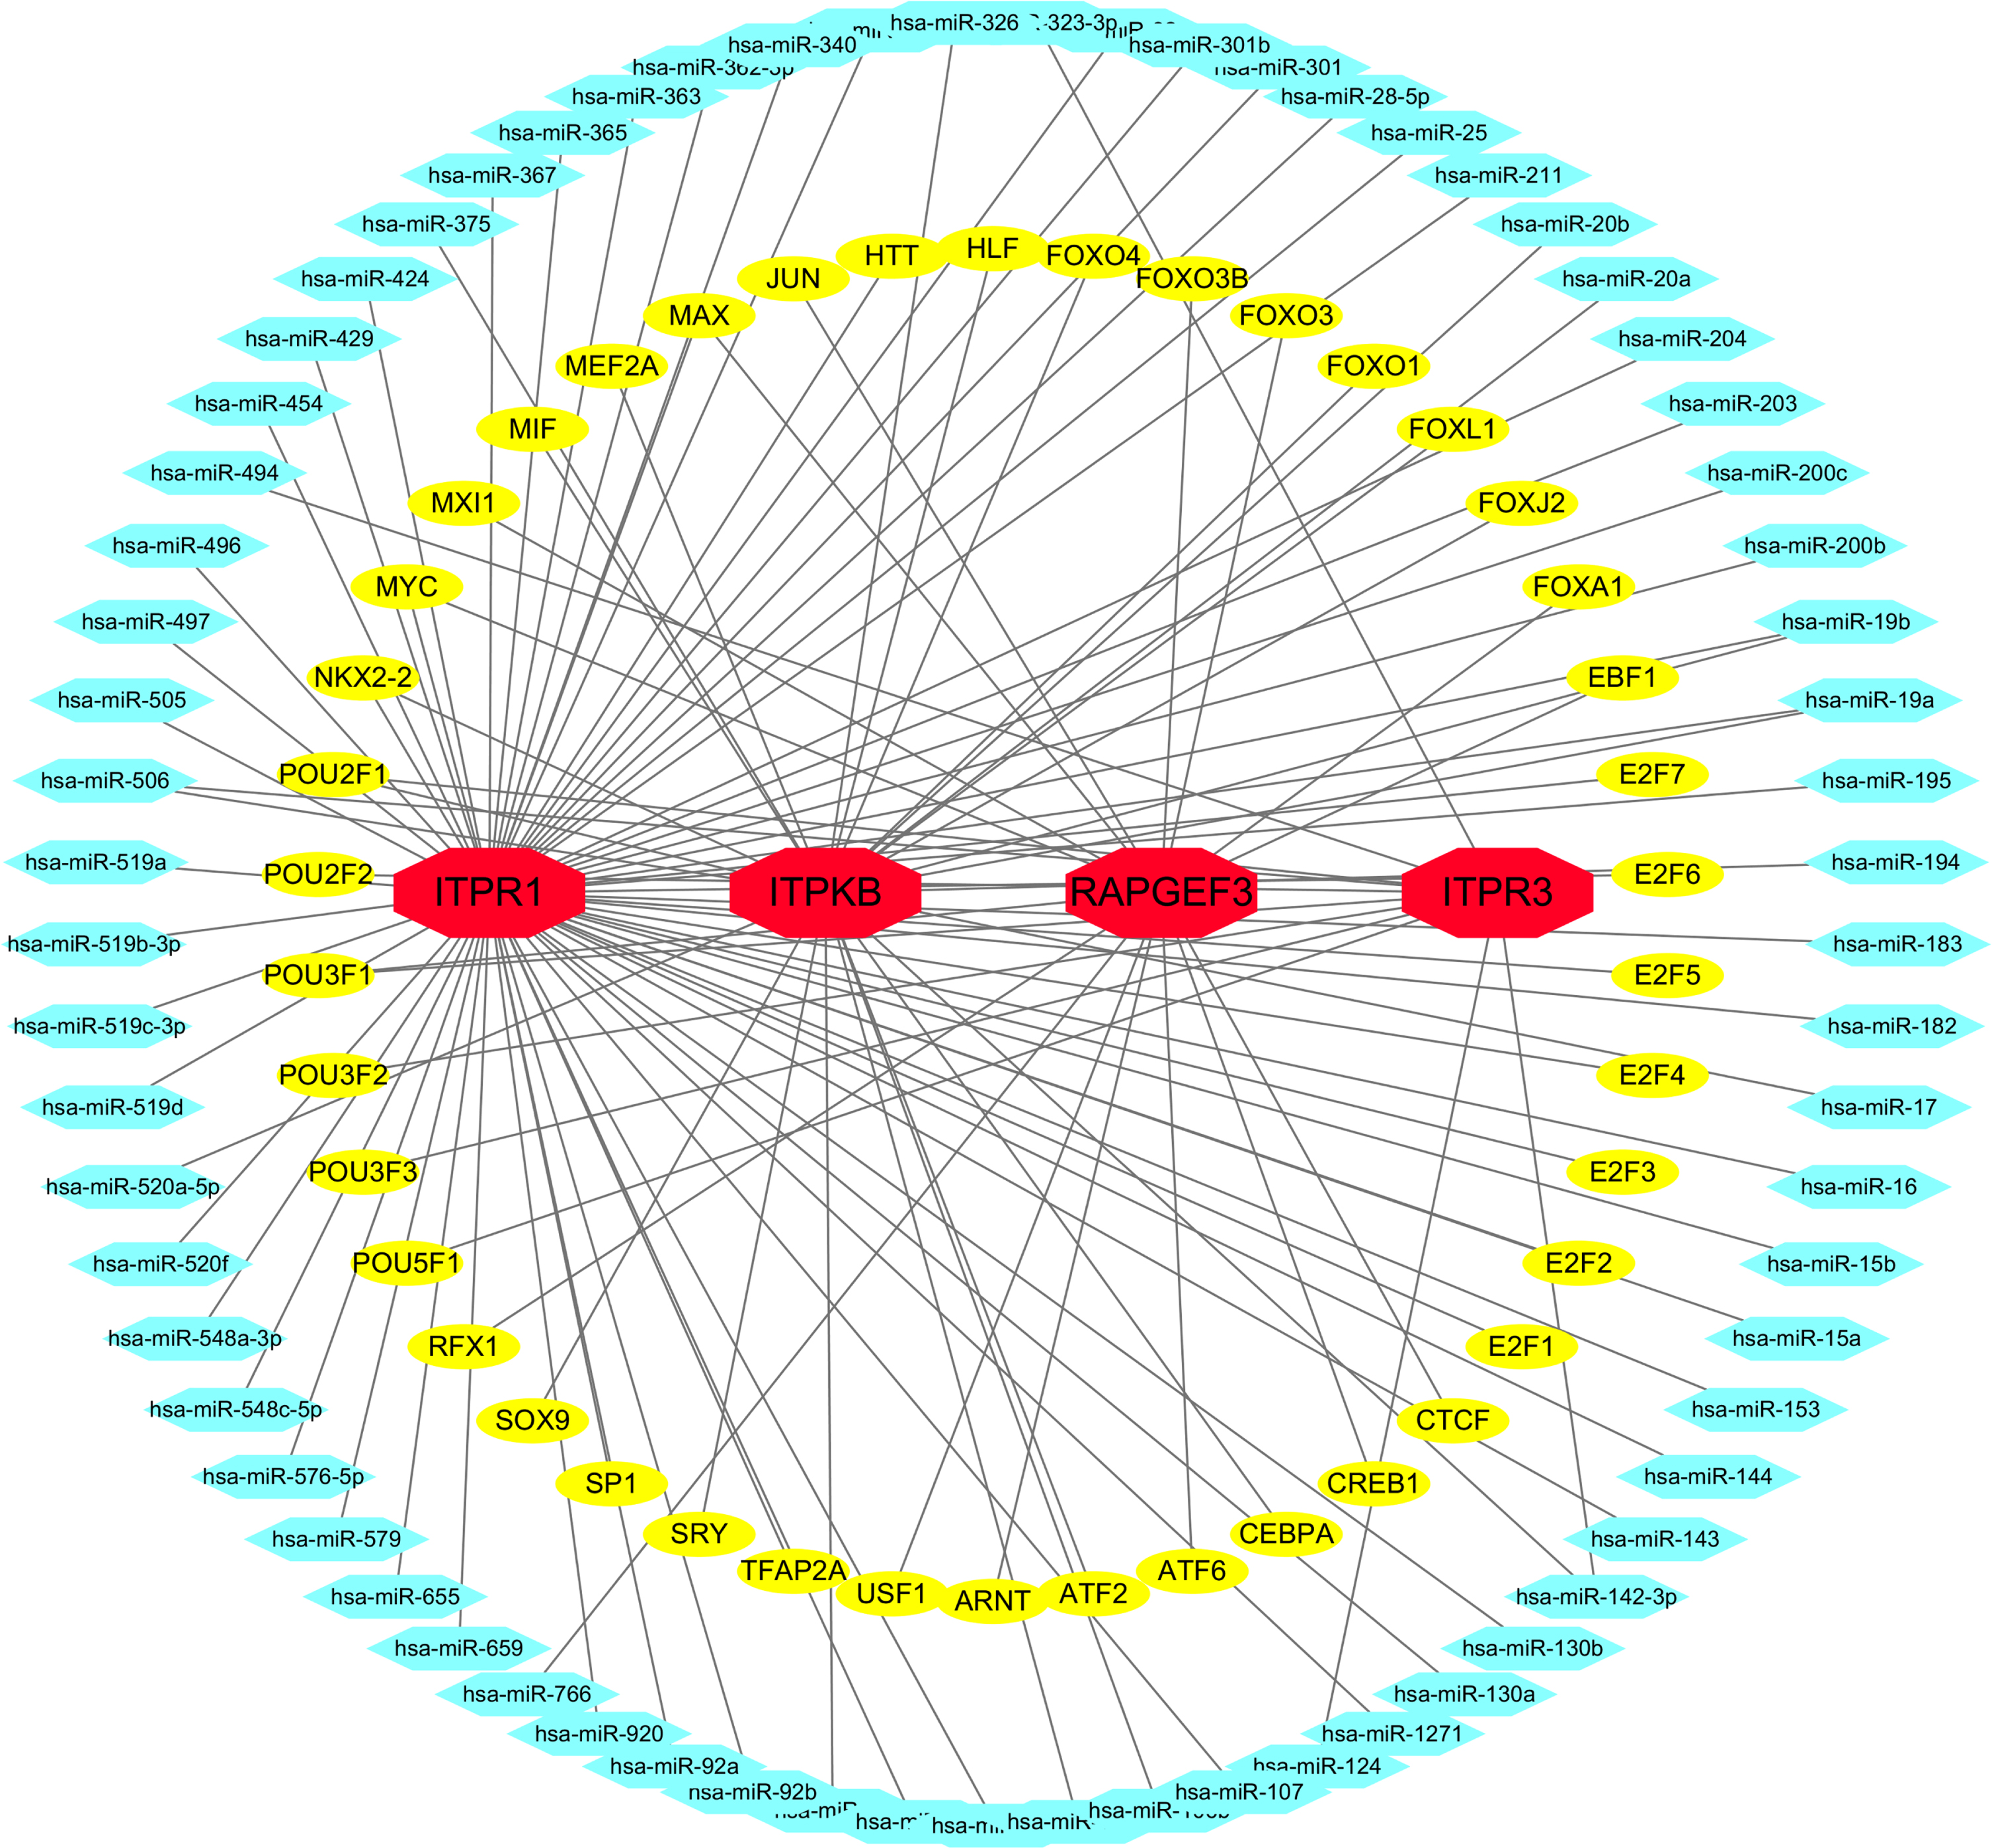 TF-miRNA coregulatory network. The network presents the interactions between TF-genes, miRNA and 4 hub genes. The red color nodes represent the hub genes, yellow nodes are TF-genes and blue nodes indicate miRNA.